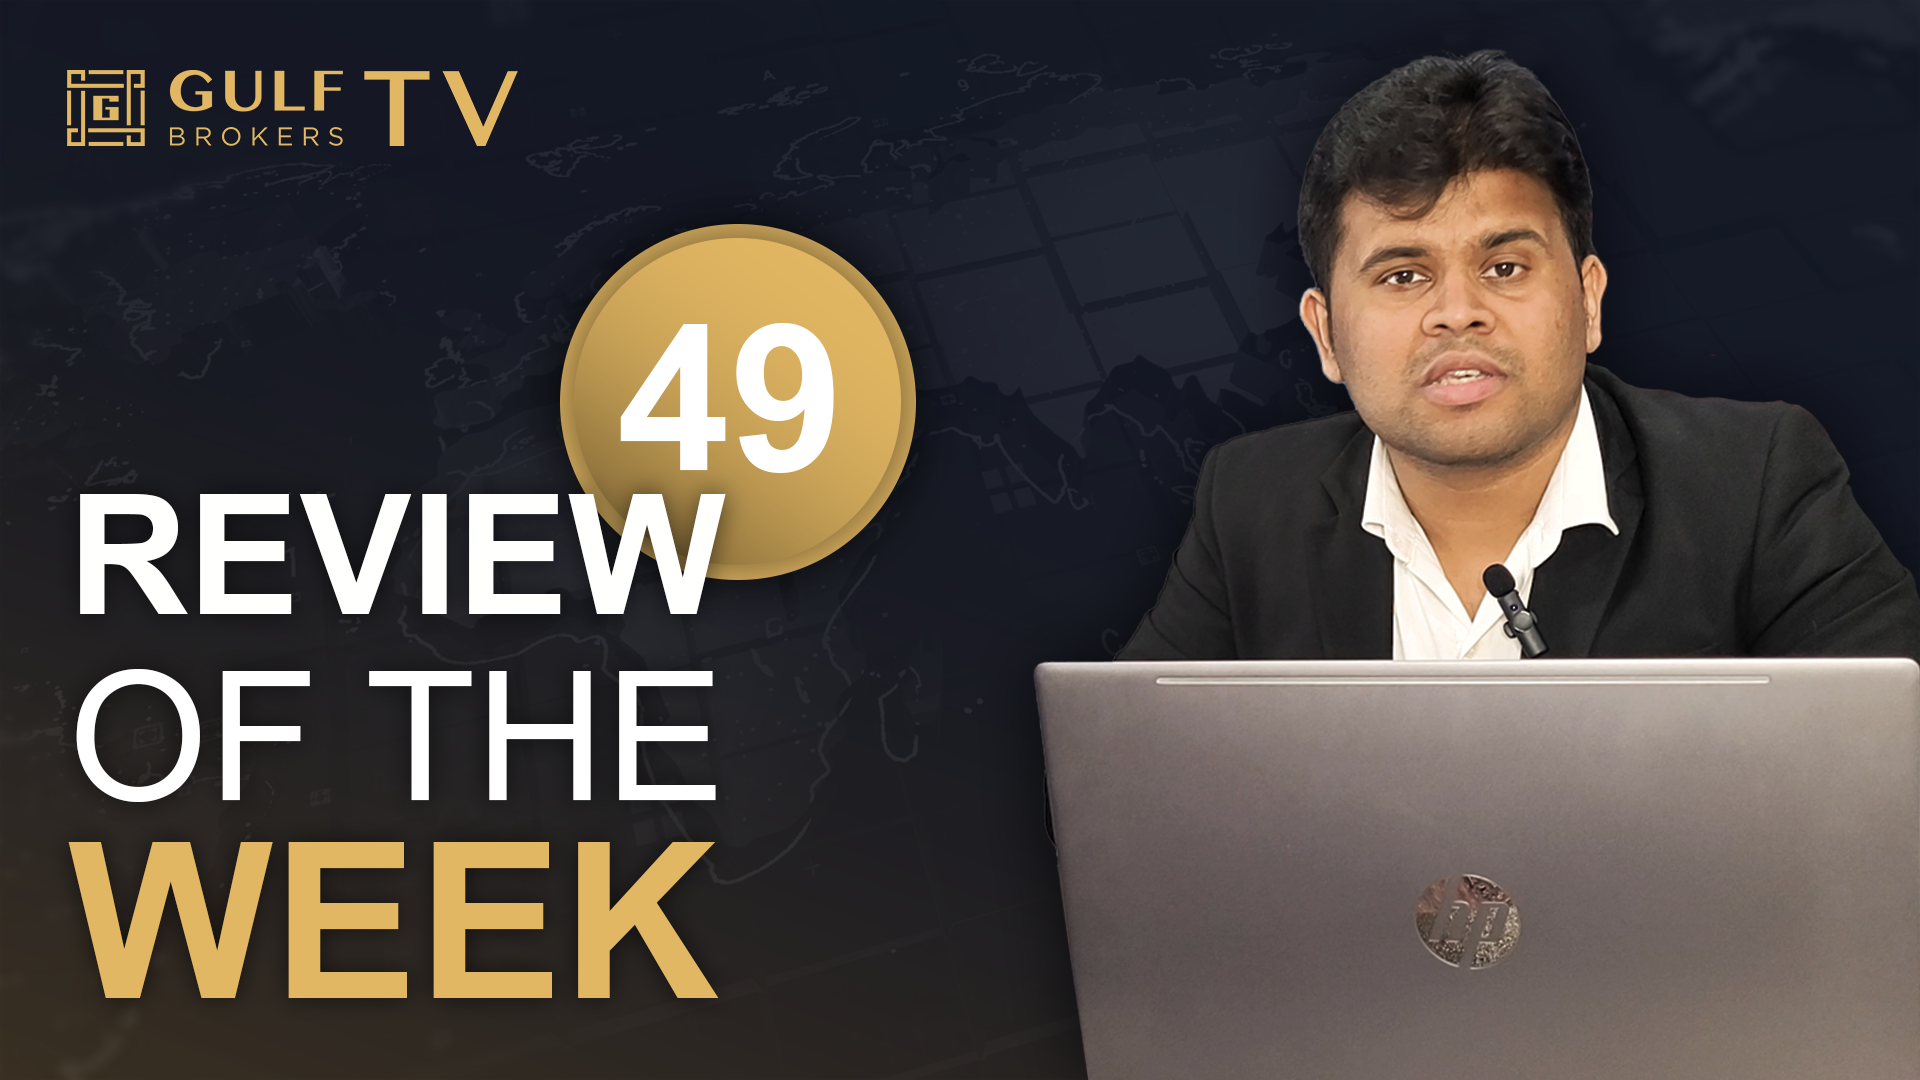 Gulfbrokers | Gulf Brokers | Review of the week 49 | Syam KP